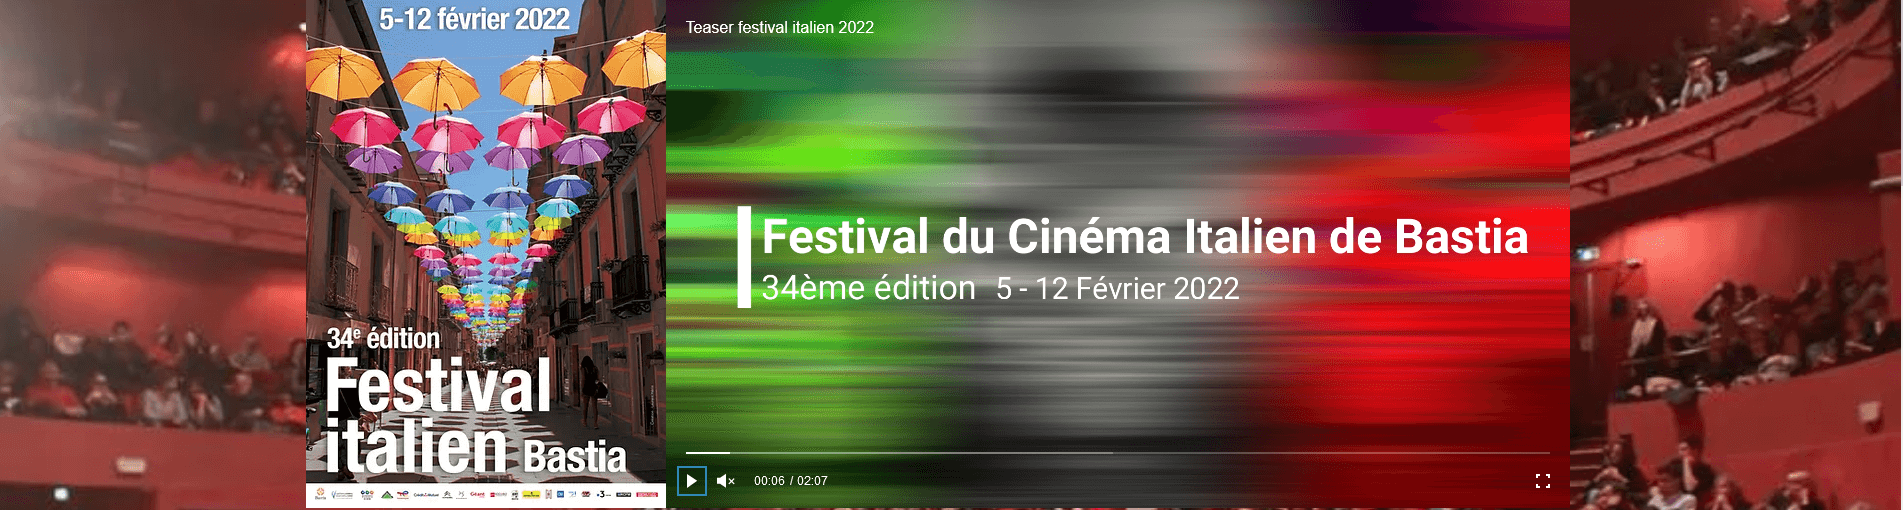 Festival du cinéma italien de Bastia 2022